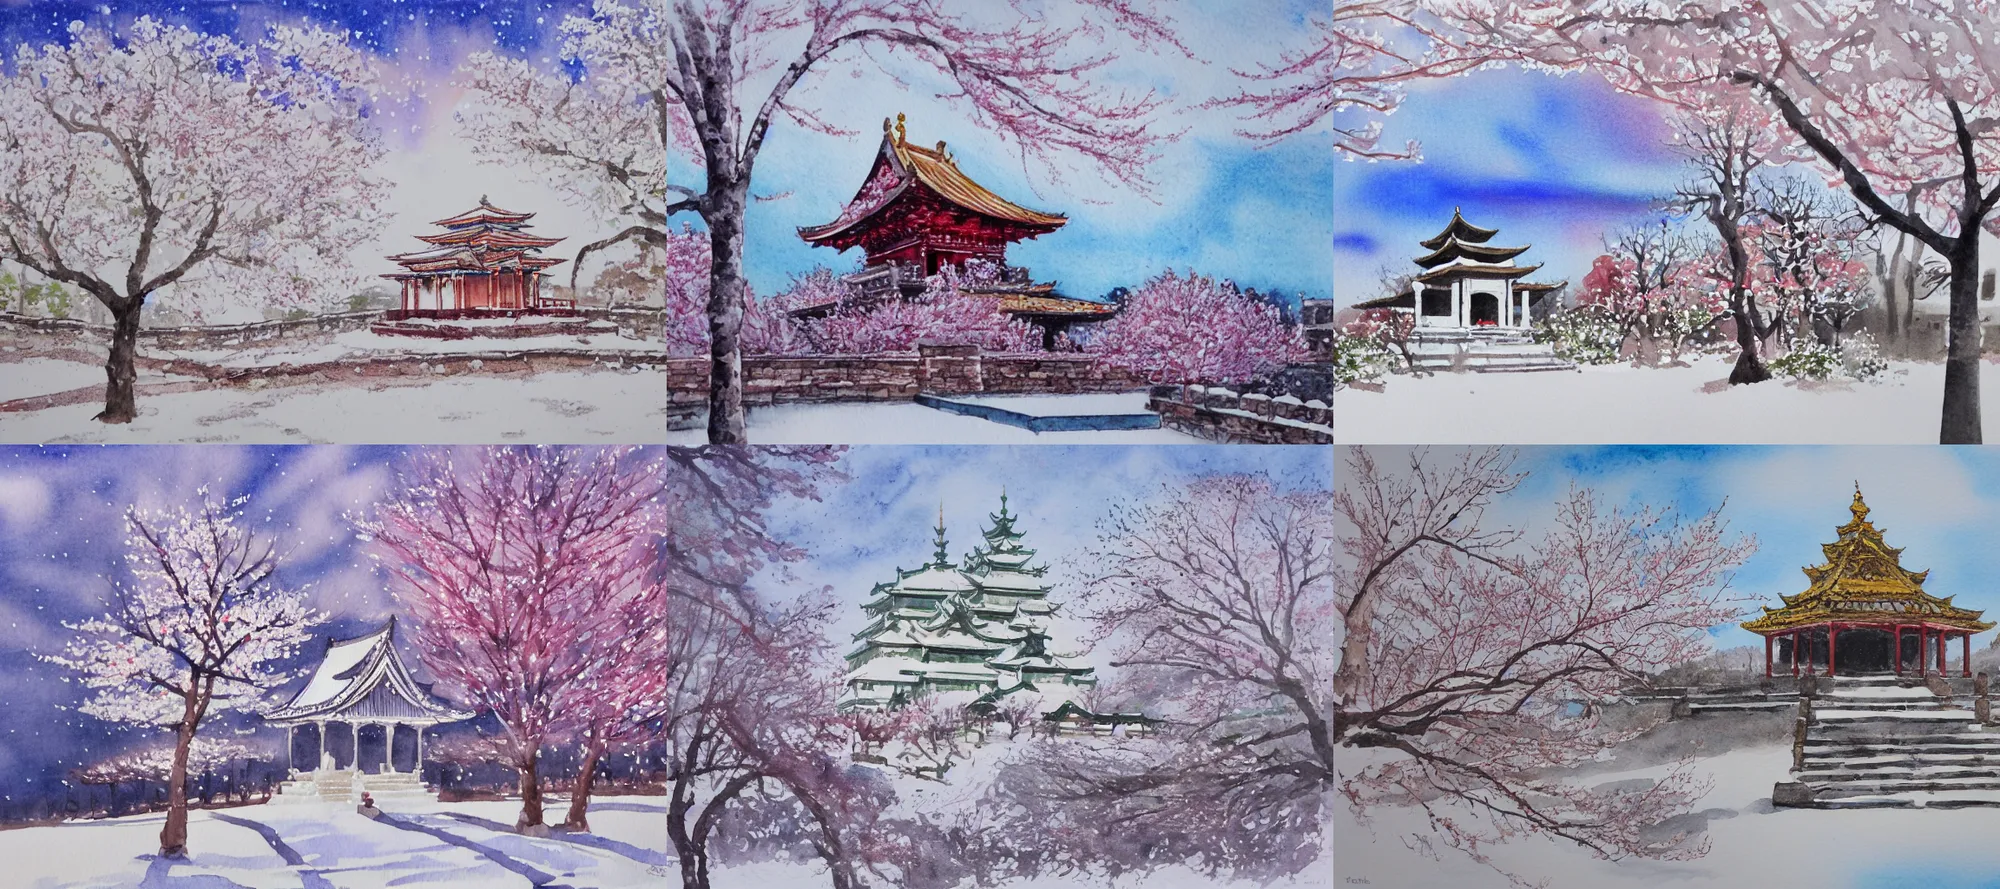 SAKURA SNOW - JAPAN PAGODA TEMPLE ASIA CHERRY BLOSSOM PINK FLOWERS -  WATERCOLOUR